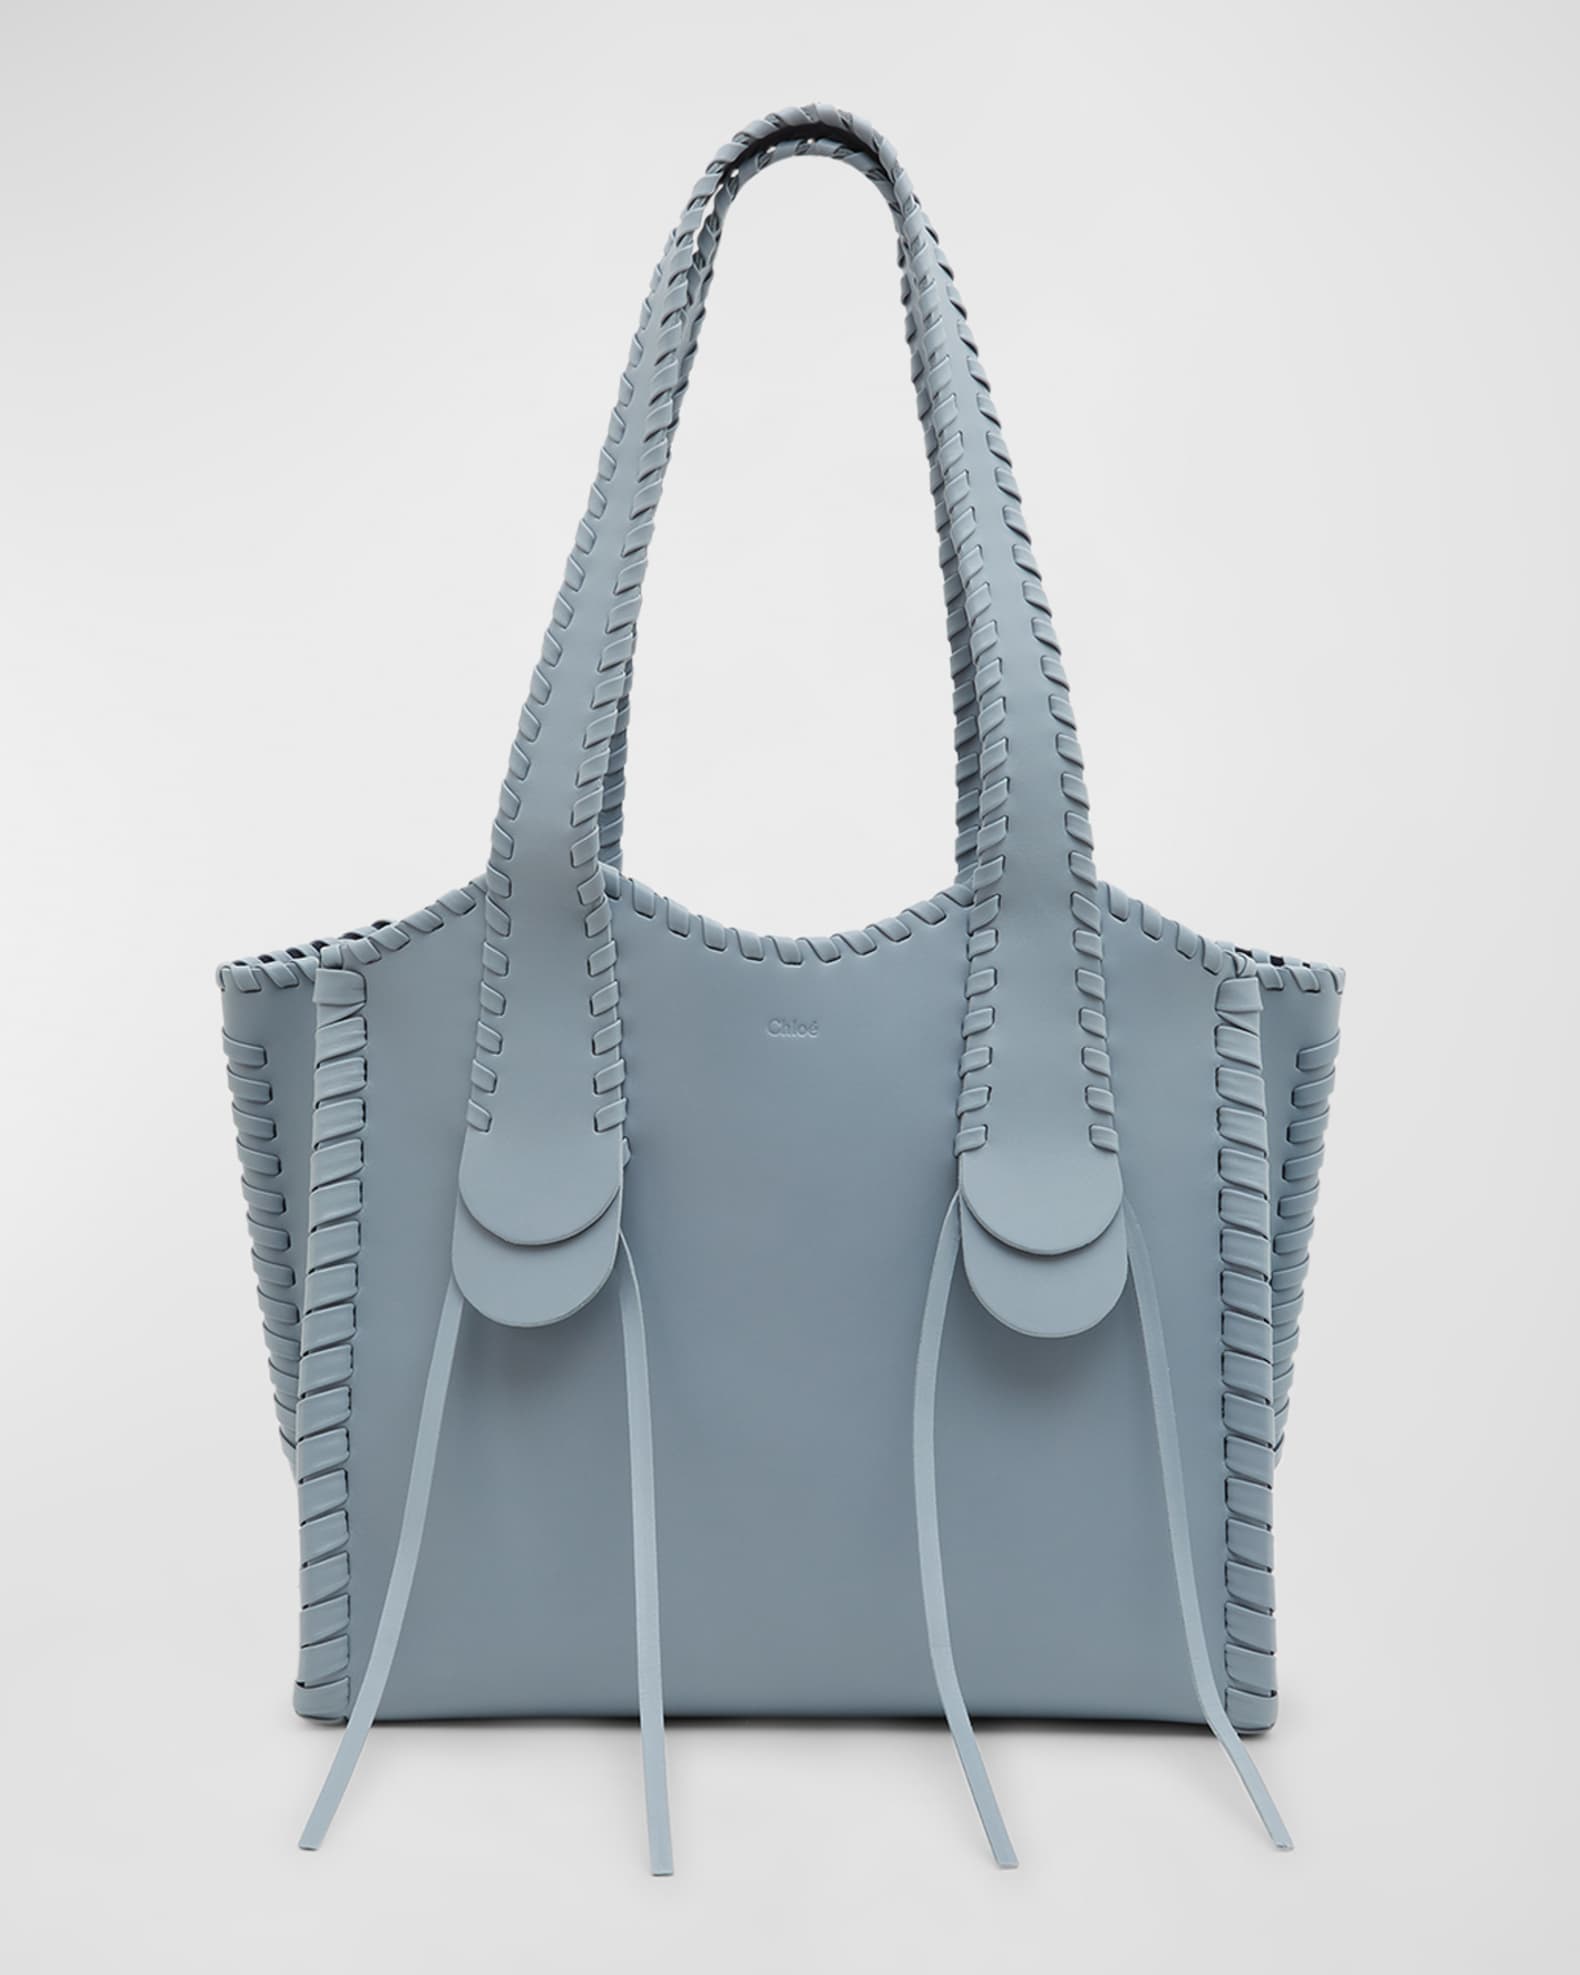 Gradient Modern Art Womens Chain Shoulder Bag Tote Handbag Clutch Hobo  Purse with Zipper for Travel Casual